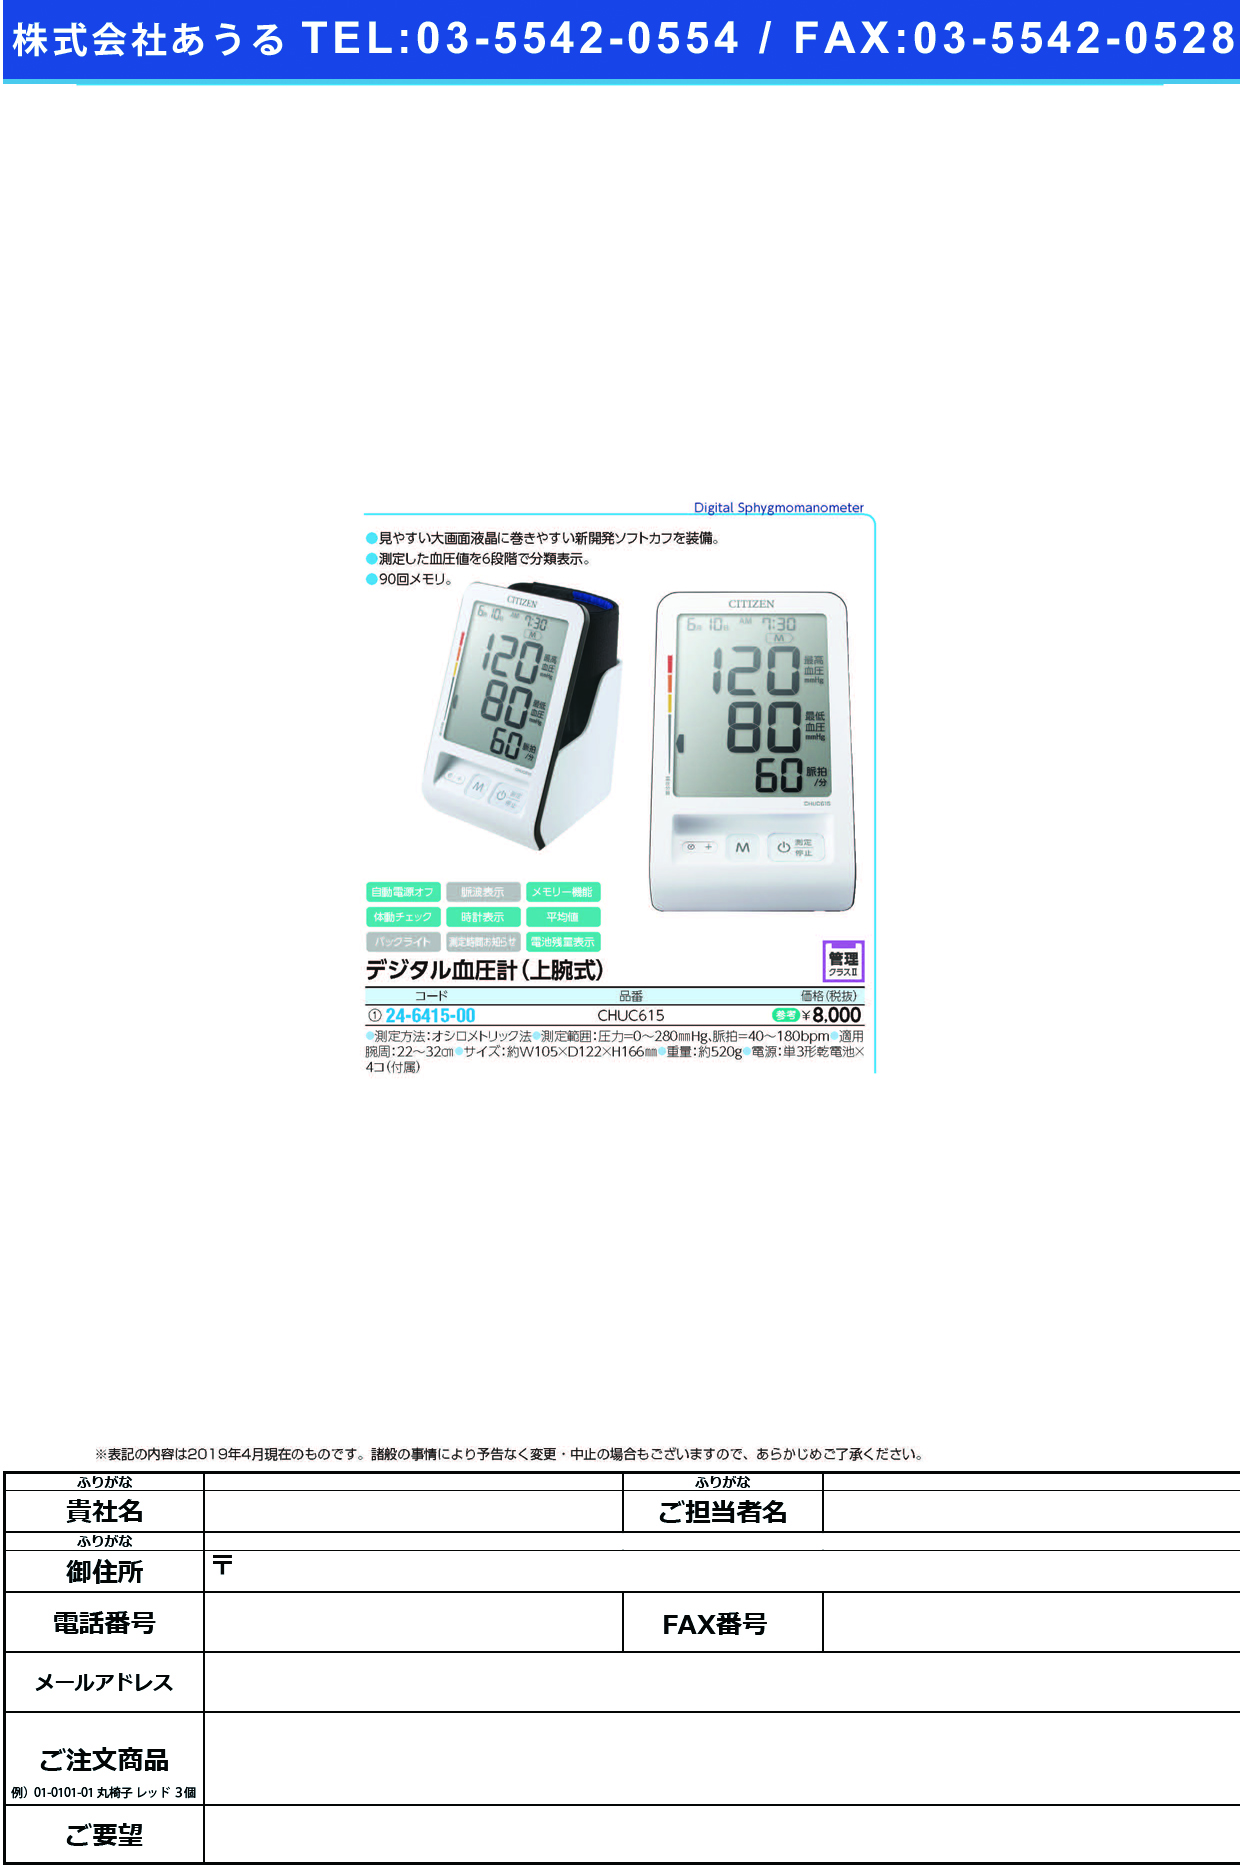 (24-6415-00)シチズン電子血圧計（上腕式） CHUC615 ｼﾁｽﾞﾝﾃﾞﾝｼｹﾂｱﾂｹｲ(ｼﾞｮｳ【1台単位】【2019年カタログ商品】